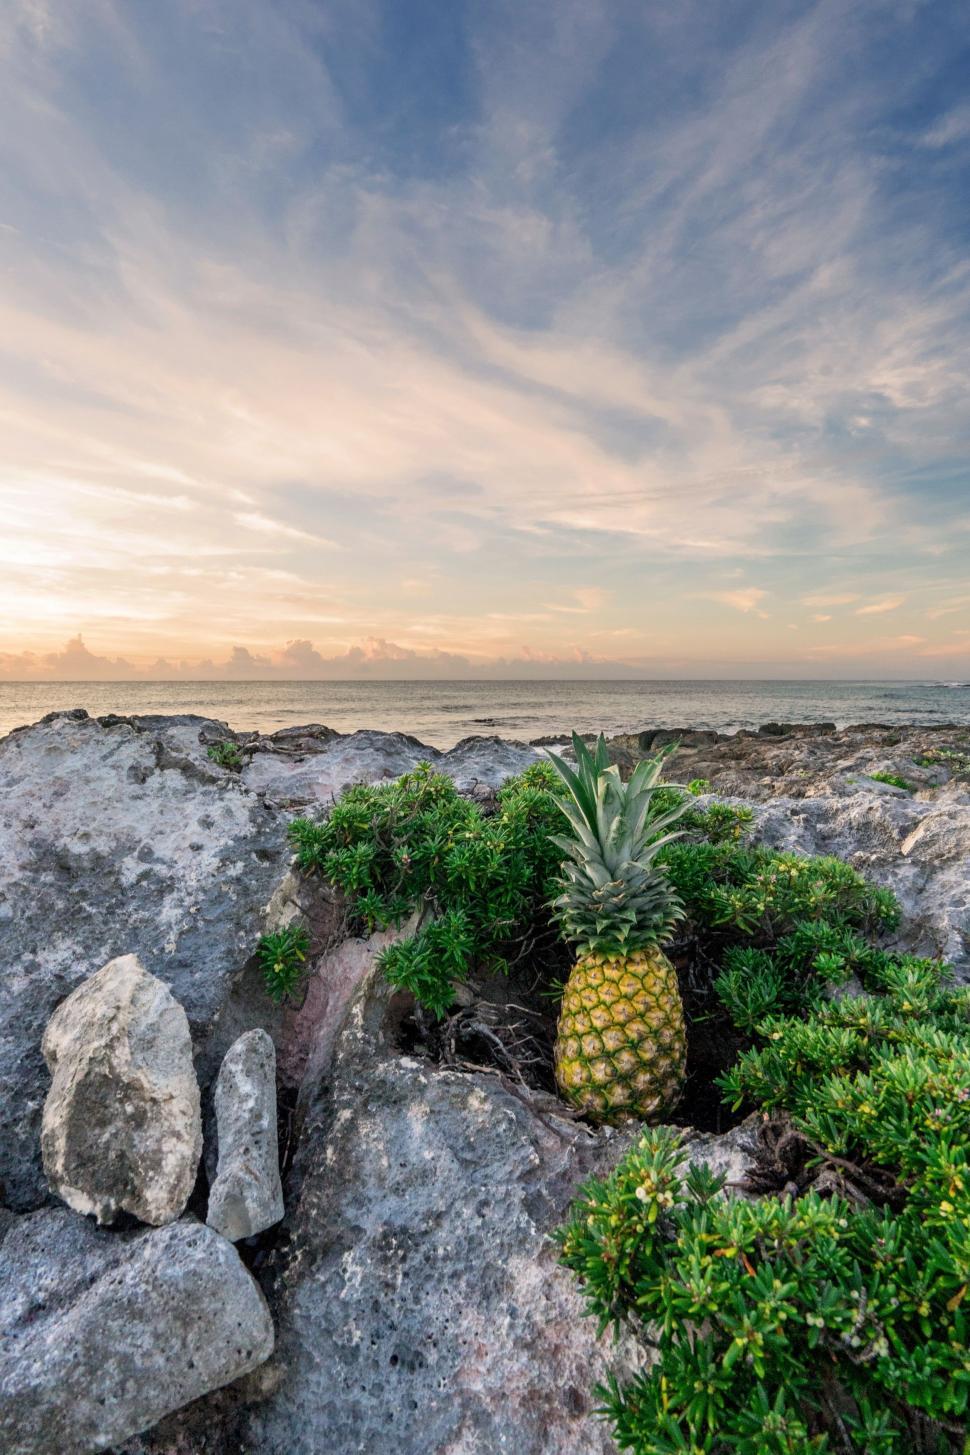 Free Image of Pineapple on Rock by Ocean 